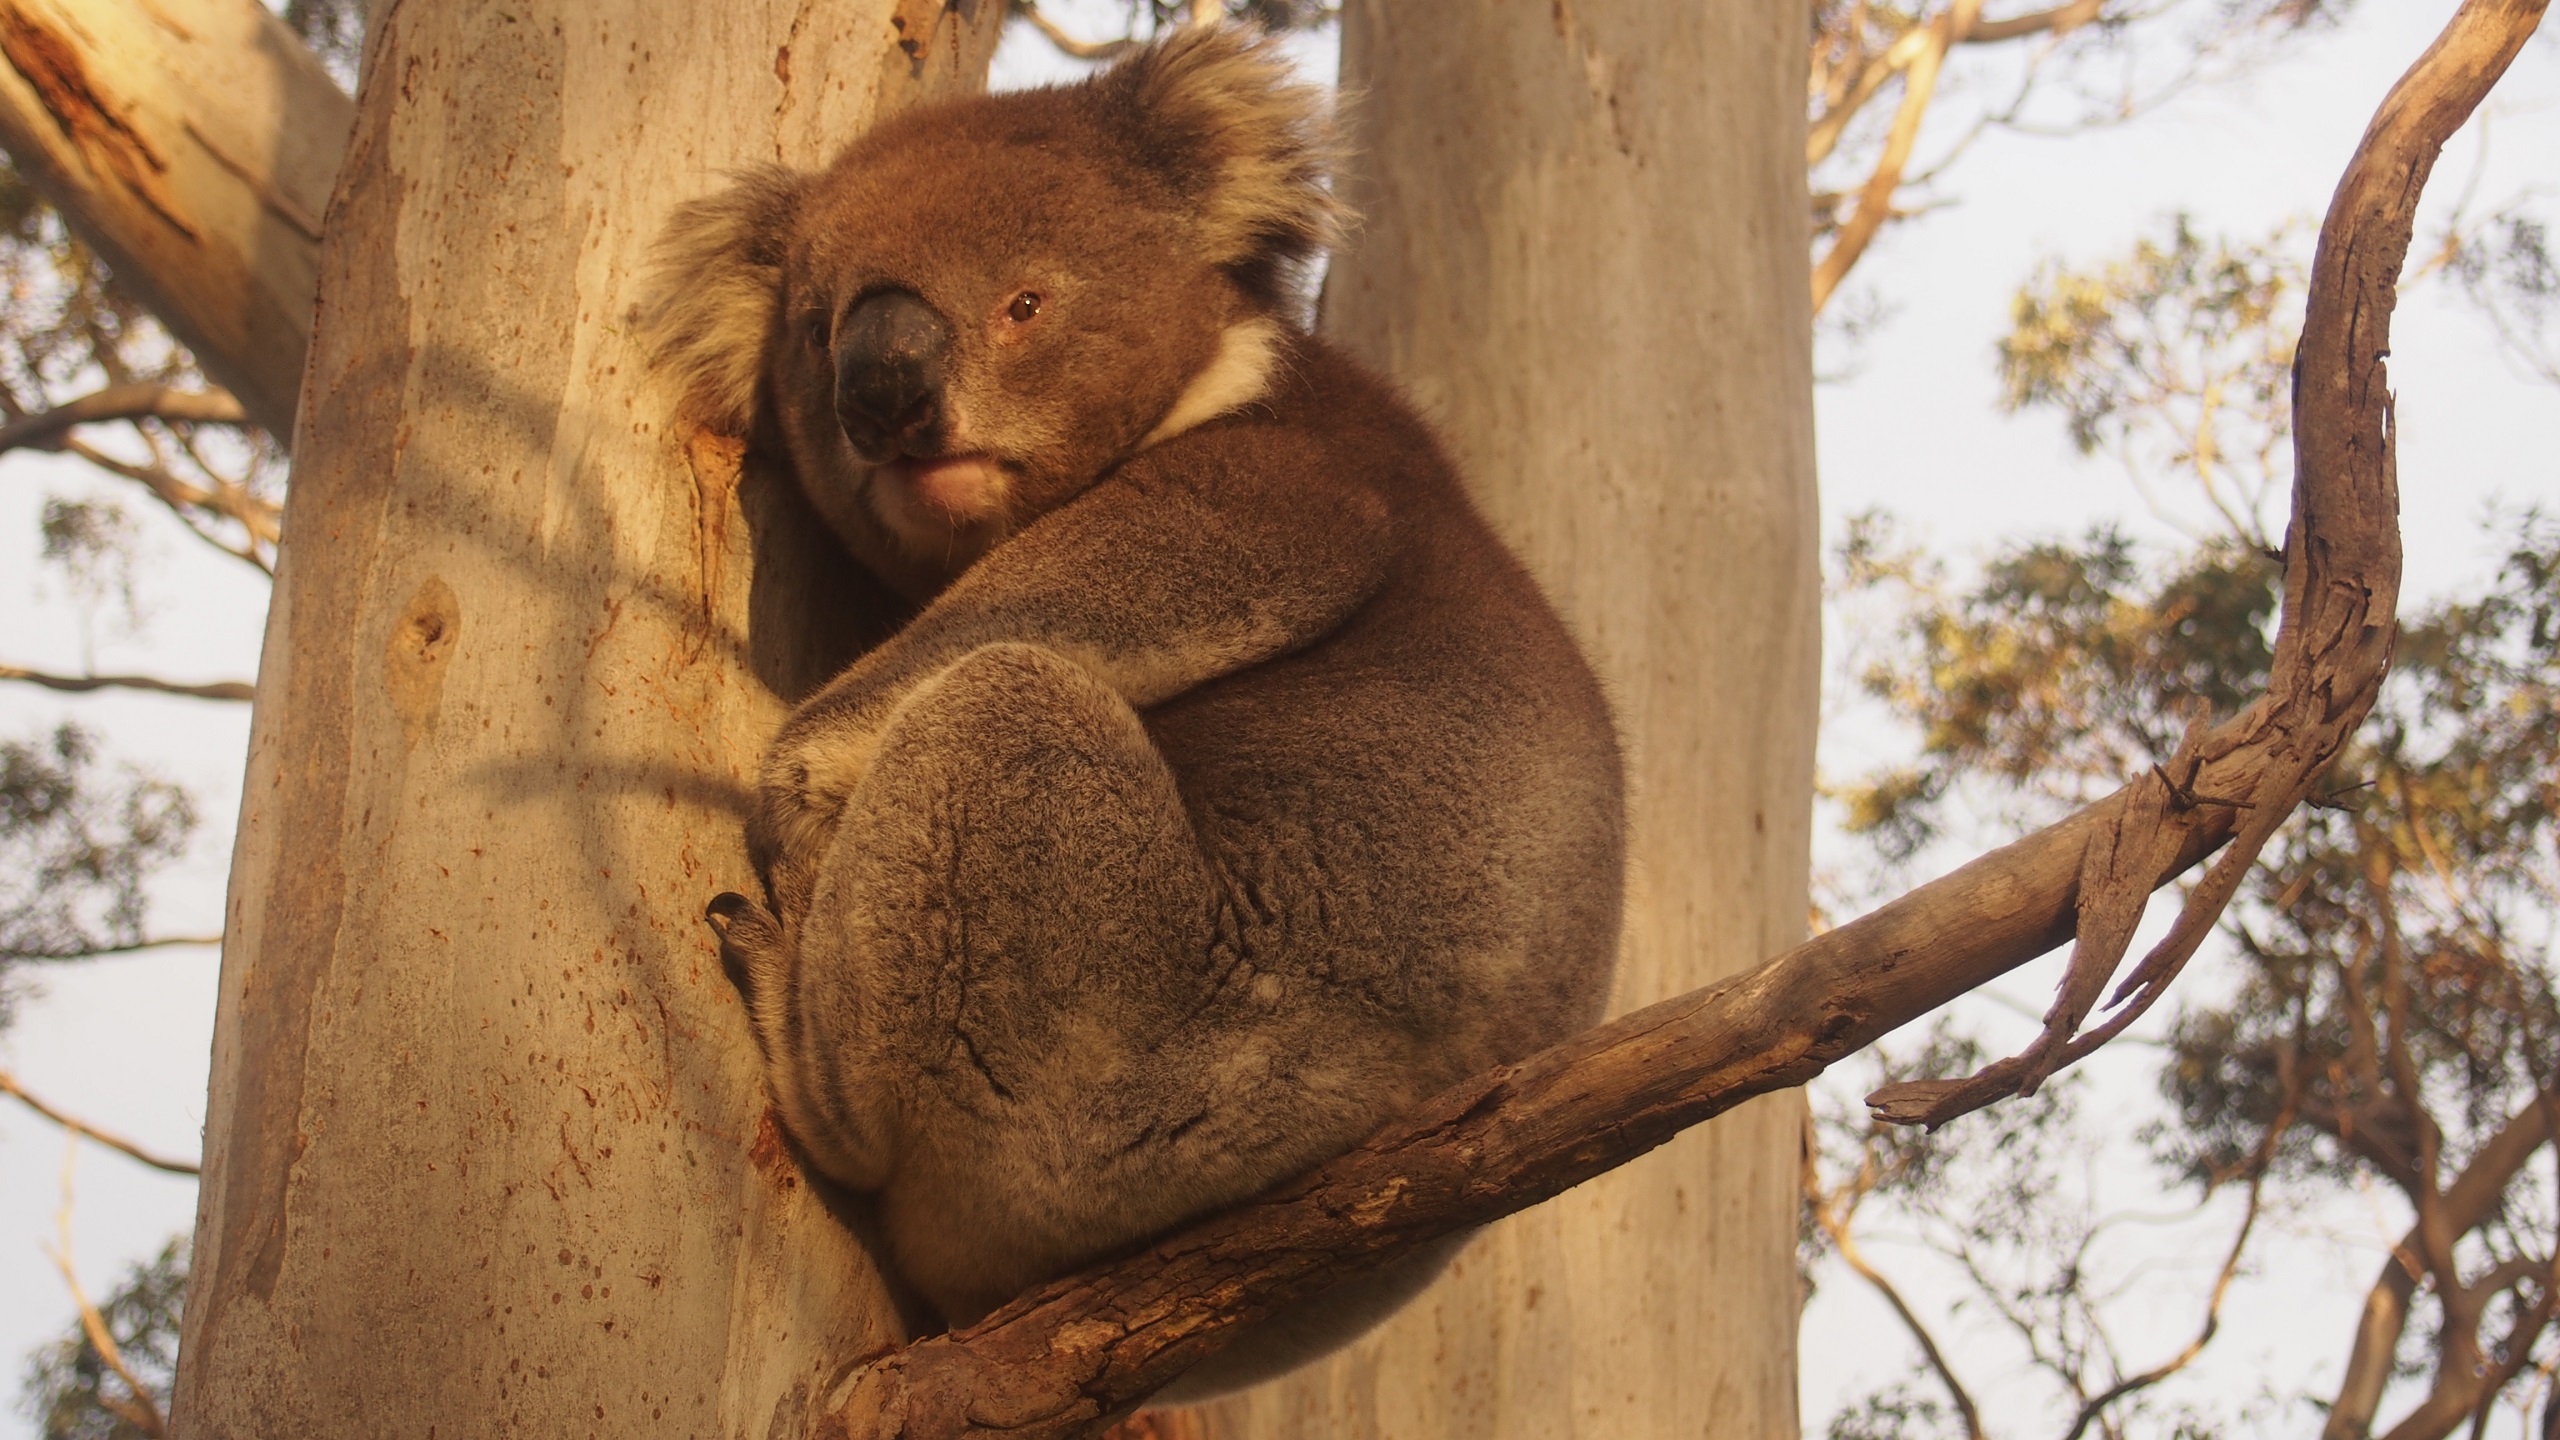 General 2560x1440 koalas Australia south australia wildlife nature marsupial outdoors trees branch animals closeup